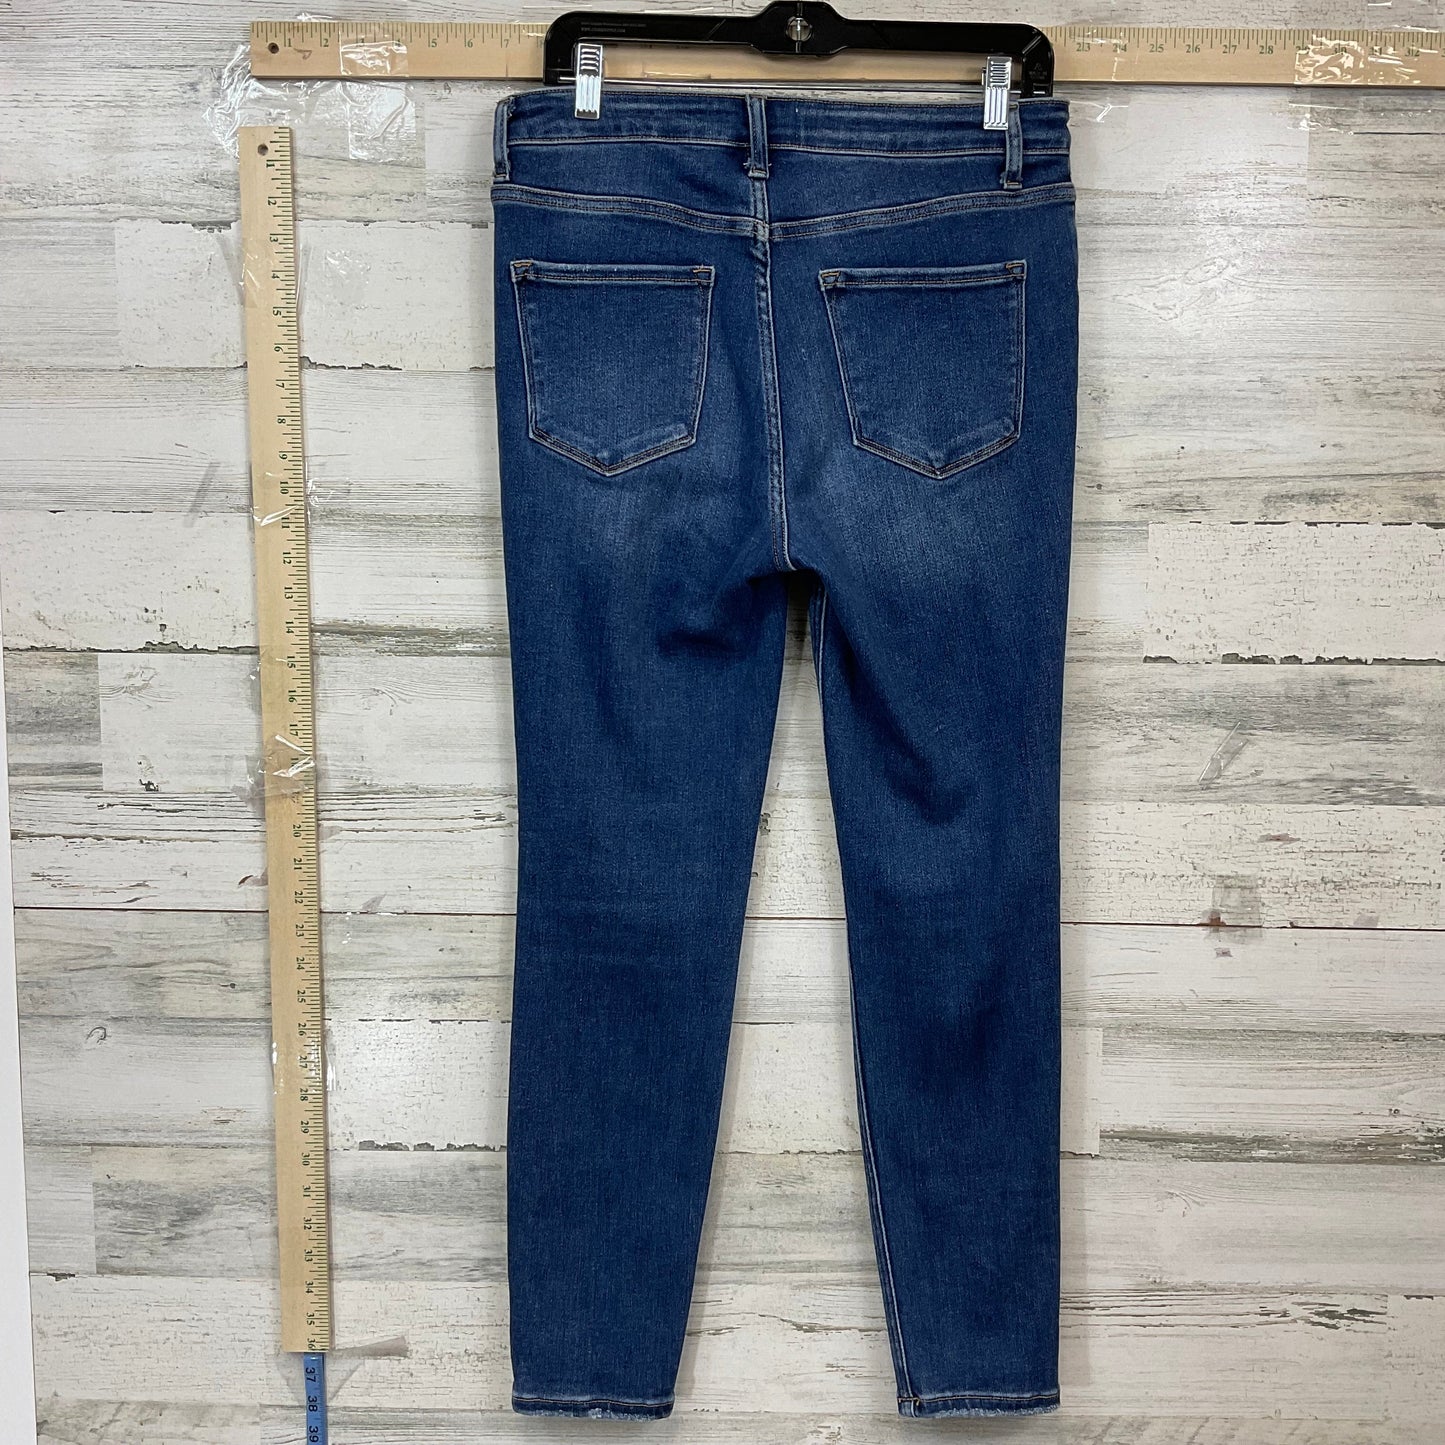 Jeans Skinny By Vervet  Size: 6